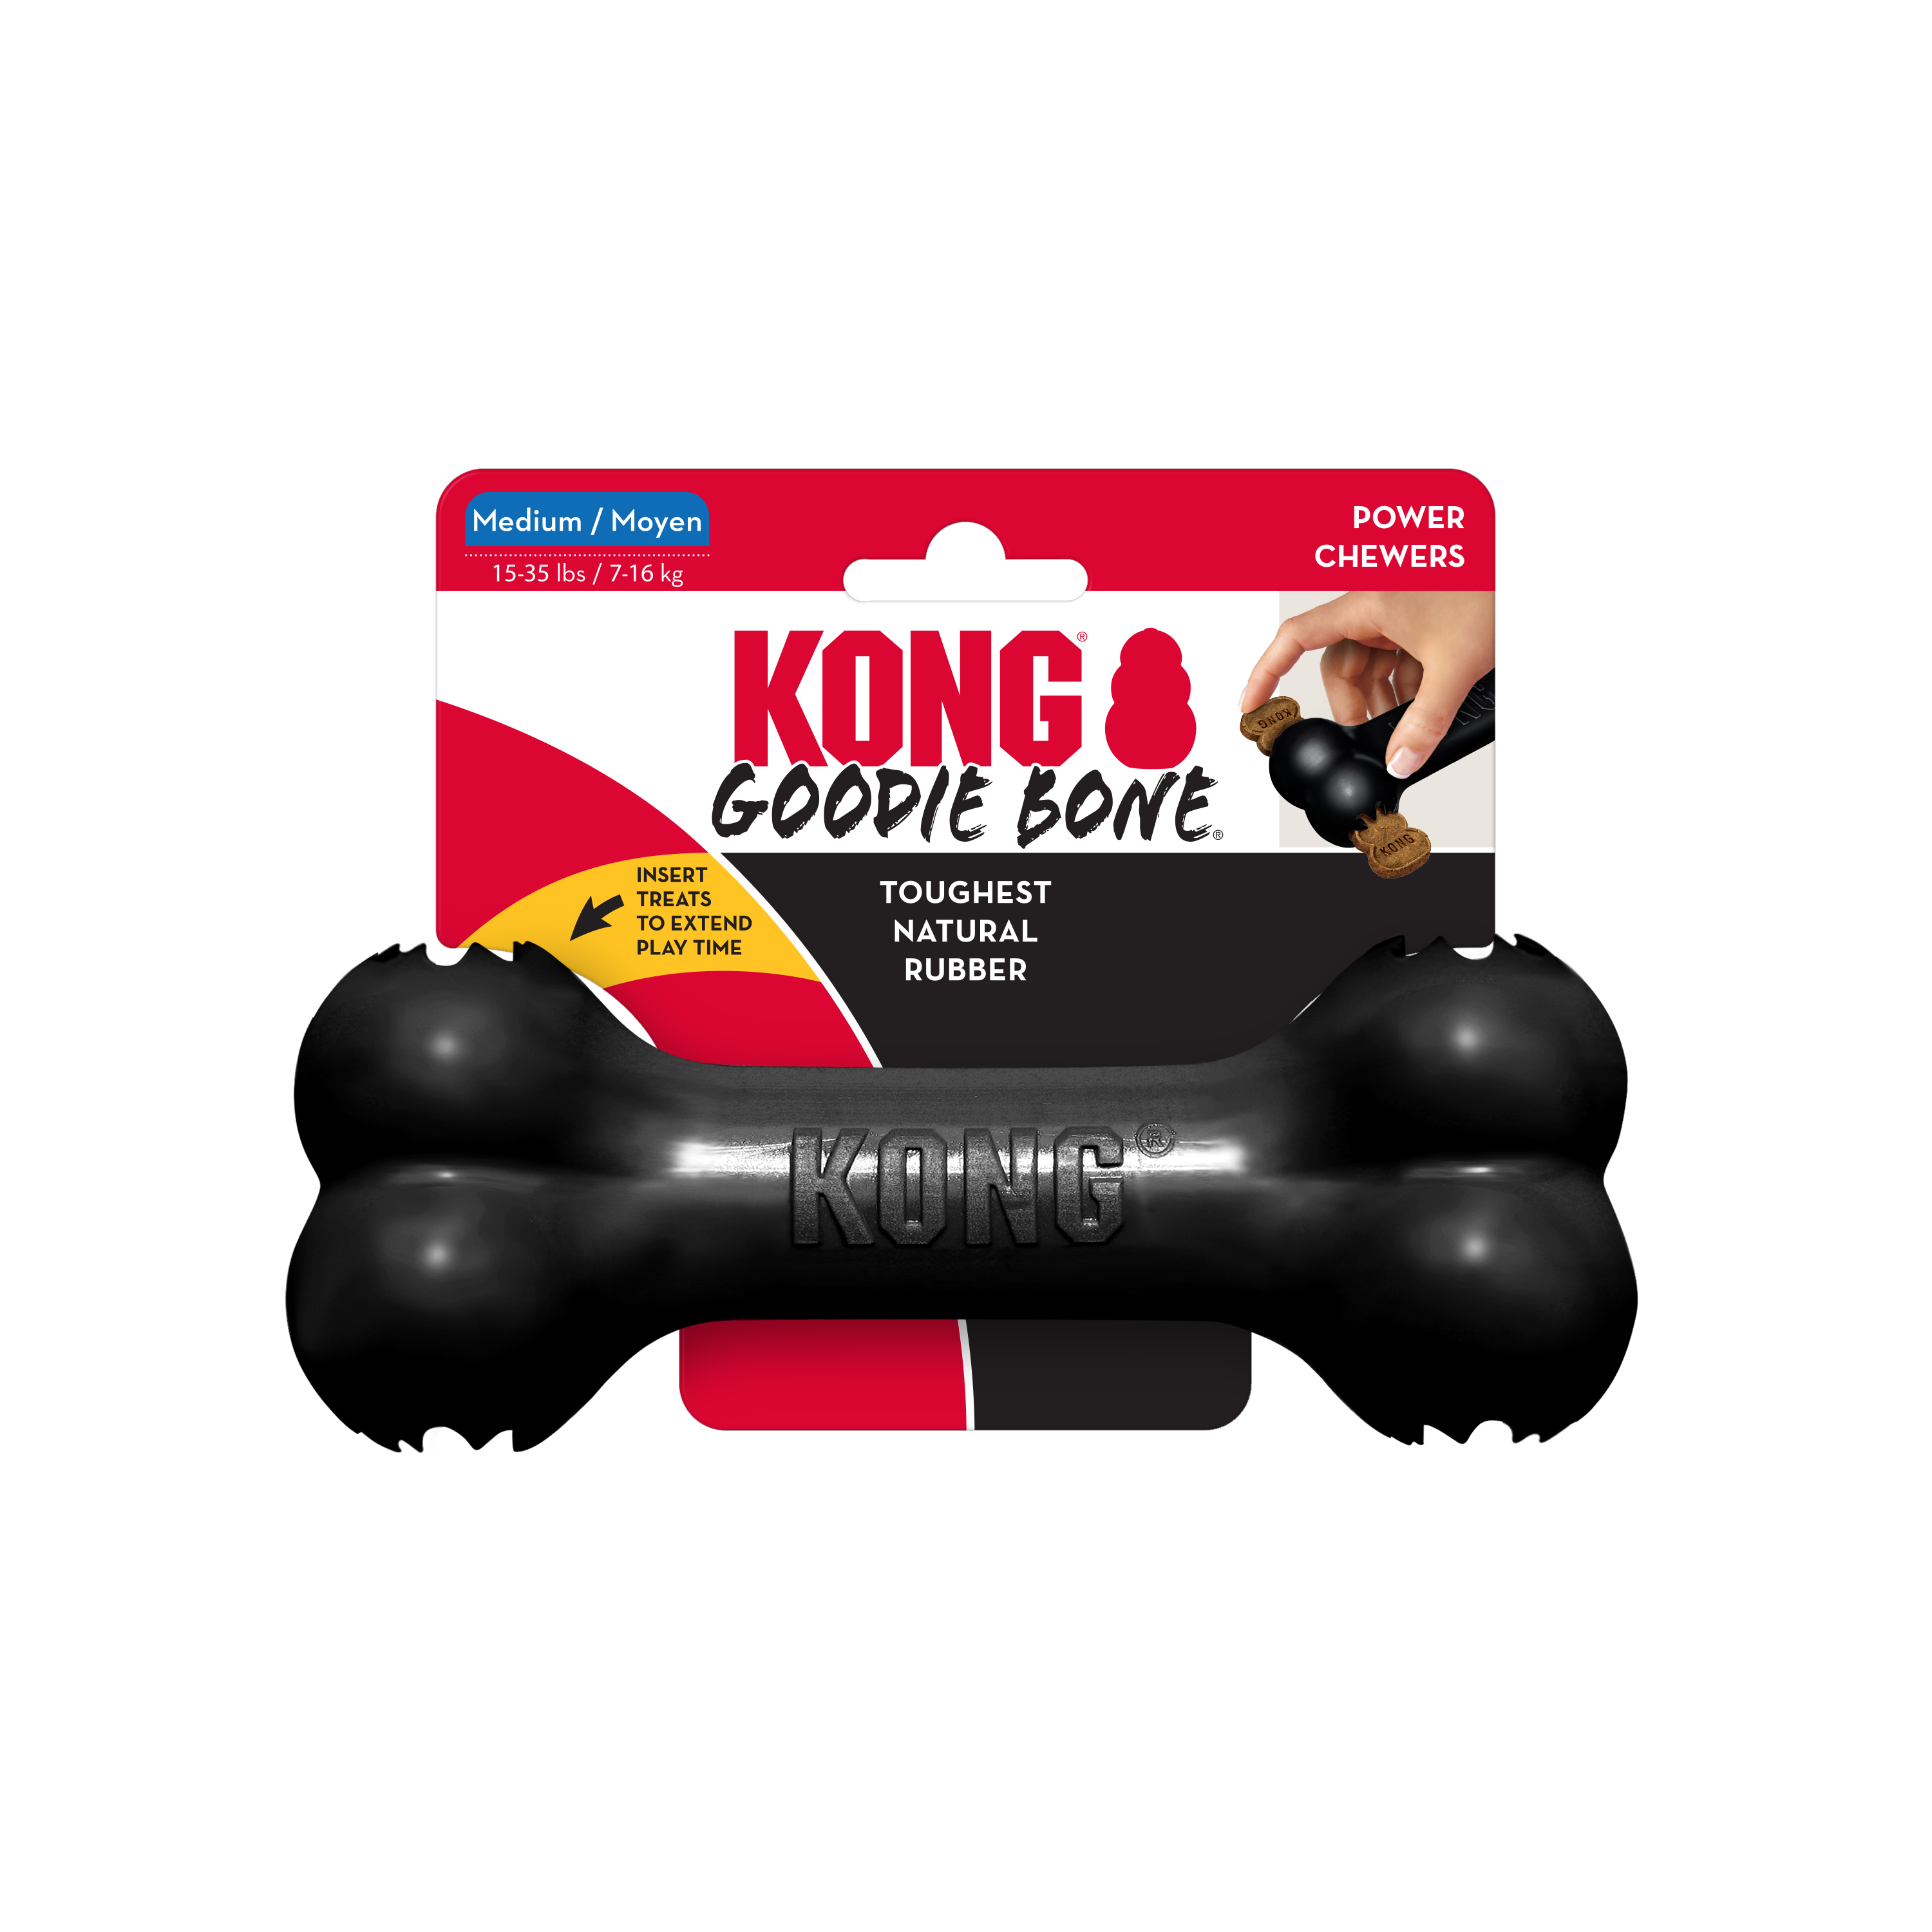 KONG Extreme Goodie Bone onpack product image